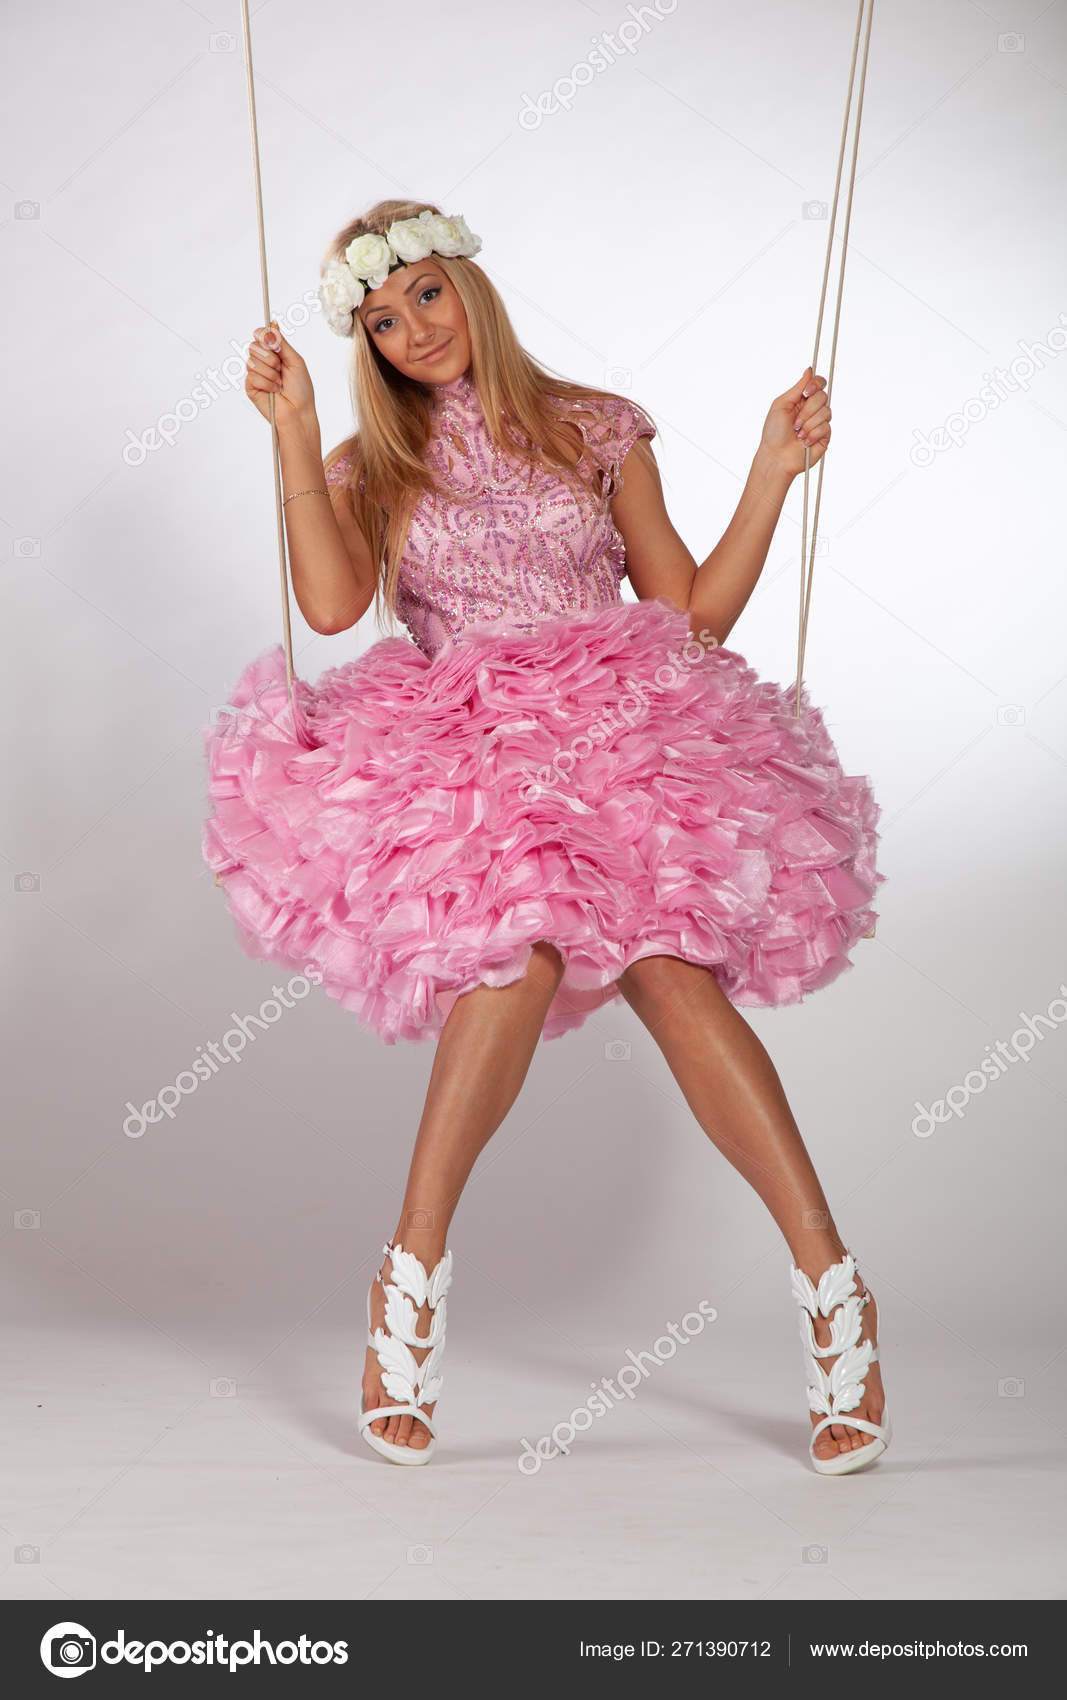 https://st4.depositphotos.com/10086424/27139/i/1600/depositphotos_271390712-stock-photo-girl-swinging-swing-studio-pink.jpg